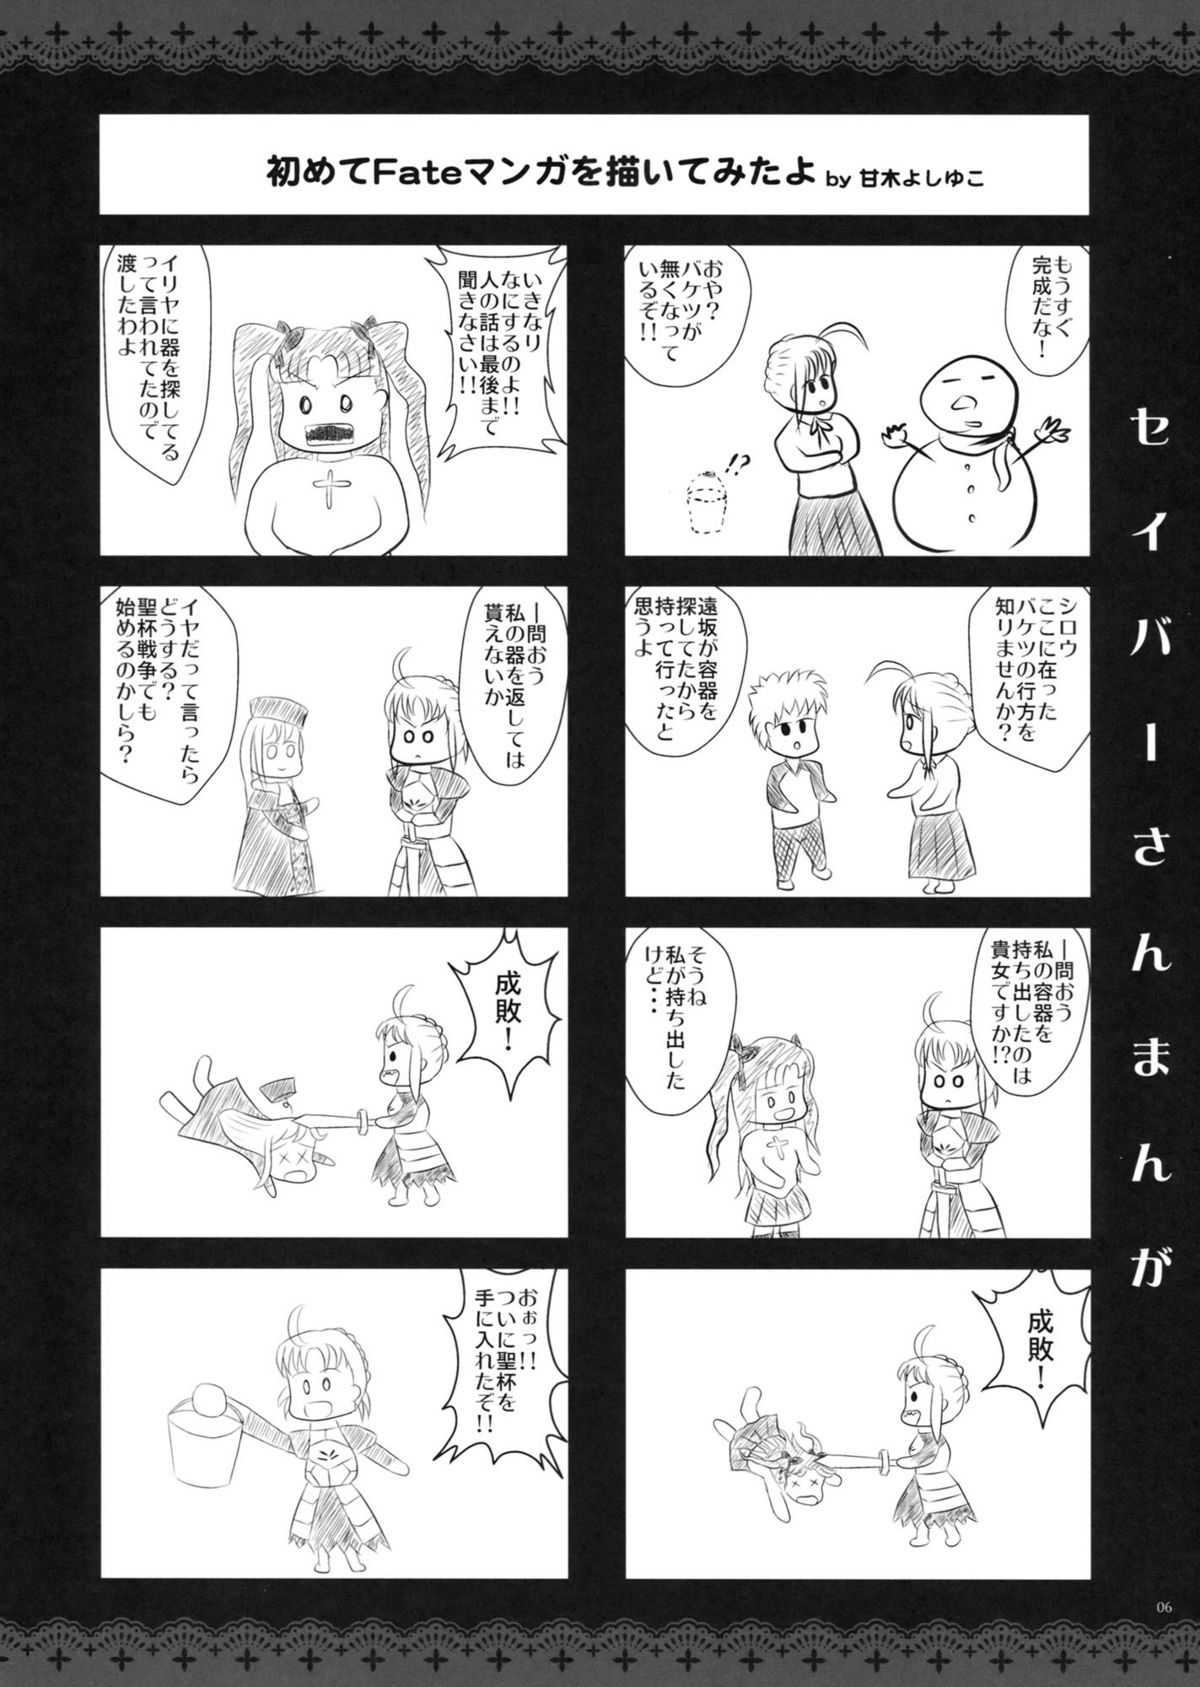 [Alemateorema (Kobayashi Yutaka)] GARIGARI 41 (Fate/stay night) [2nd Edition 2012-03-25] [アレマテオレマ (小林由高)] GARIGARI 41 (Fate/stay night) [第2刷 2012年03月25日]